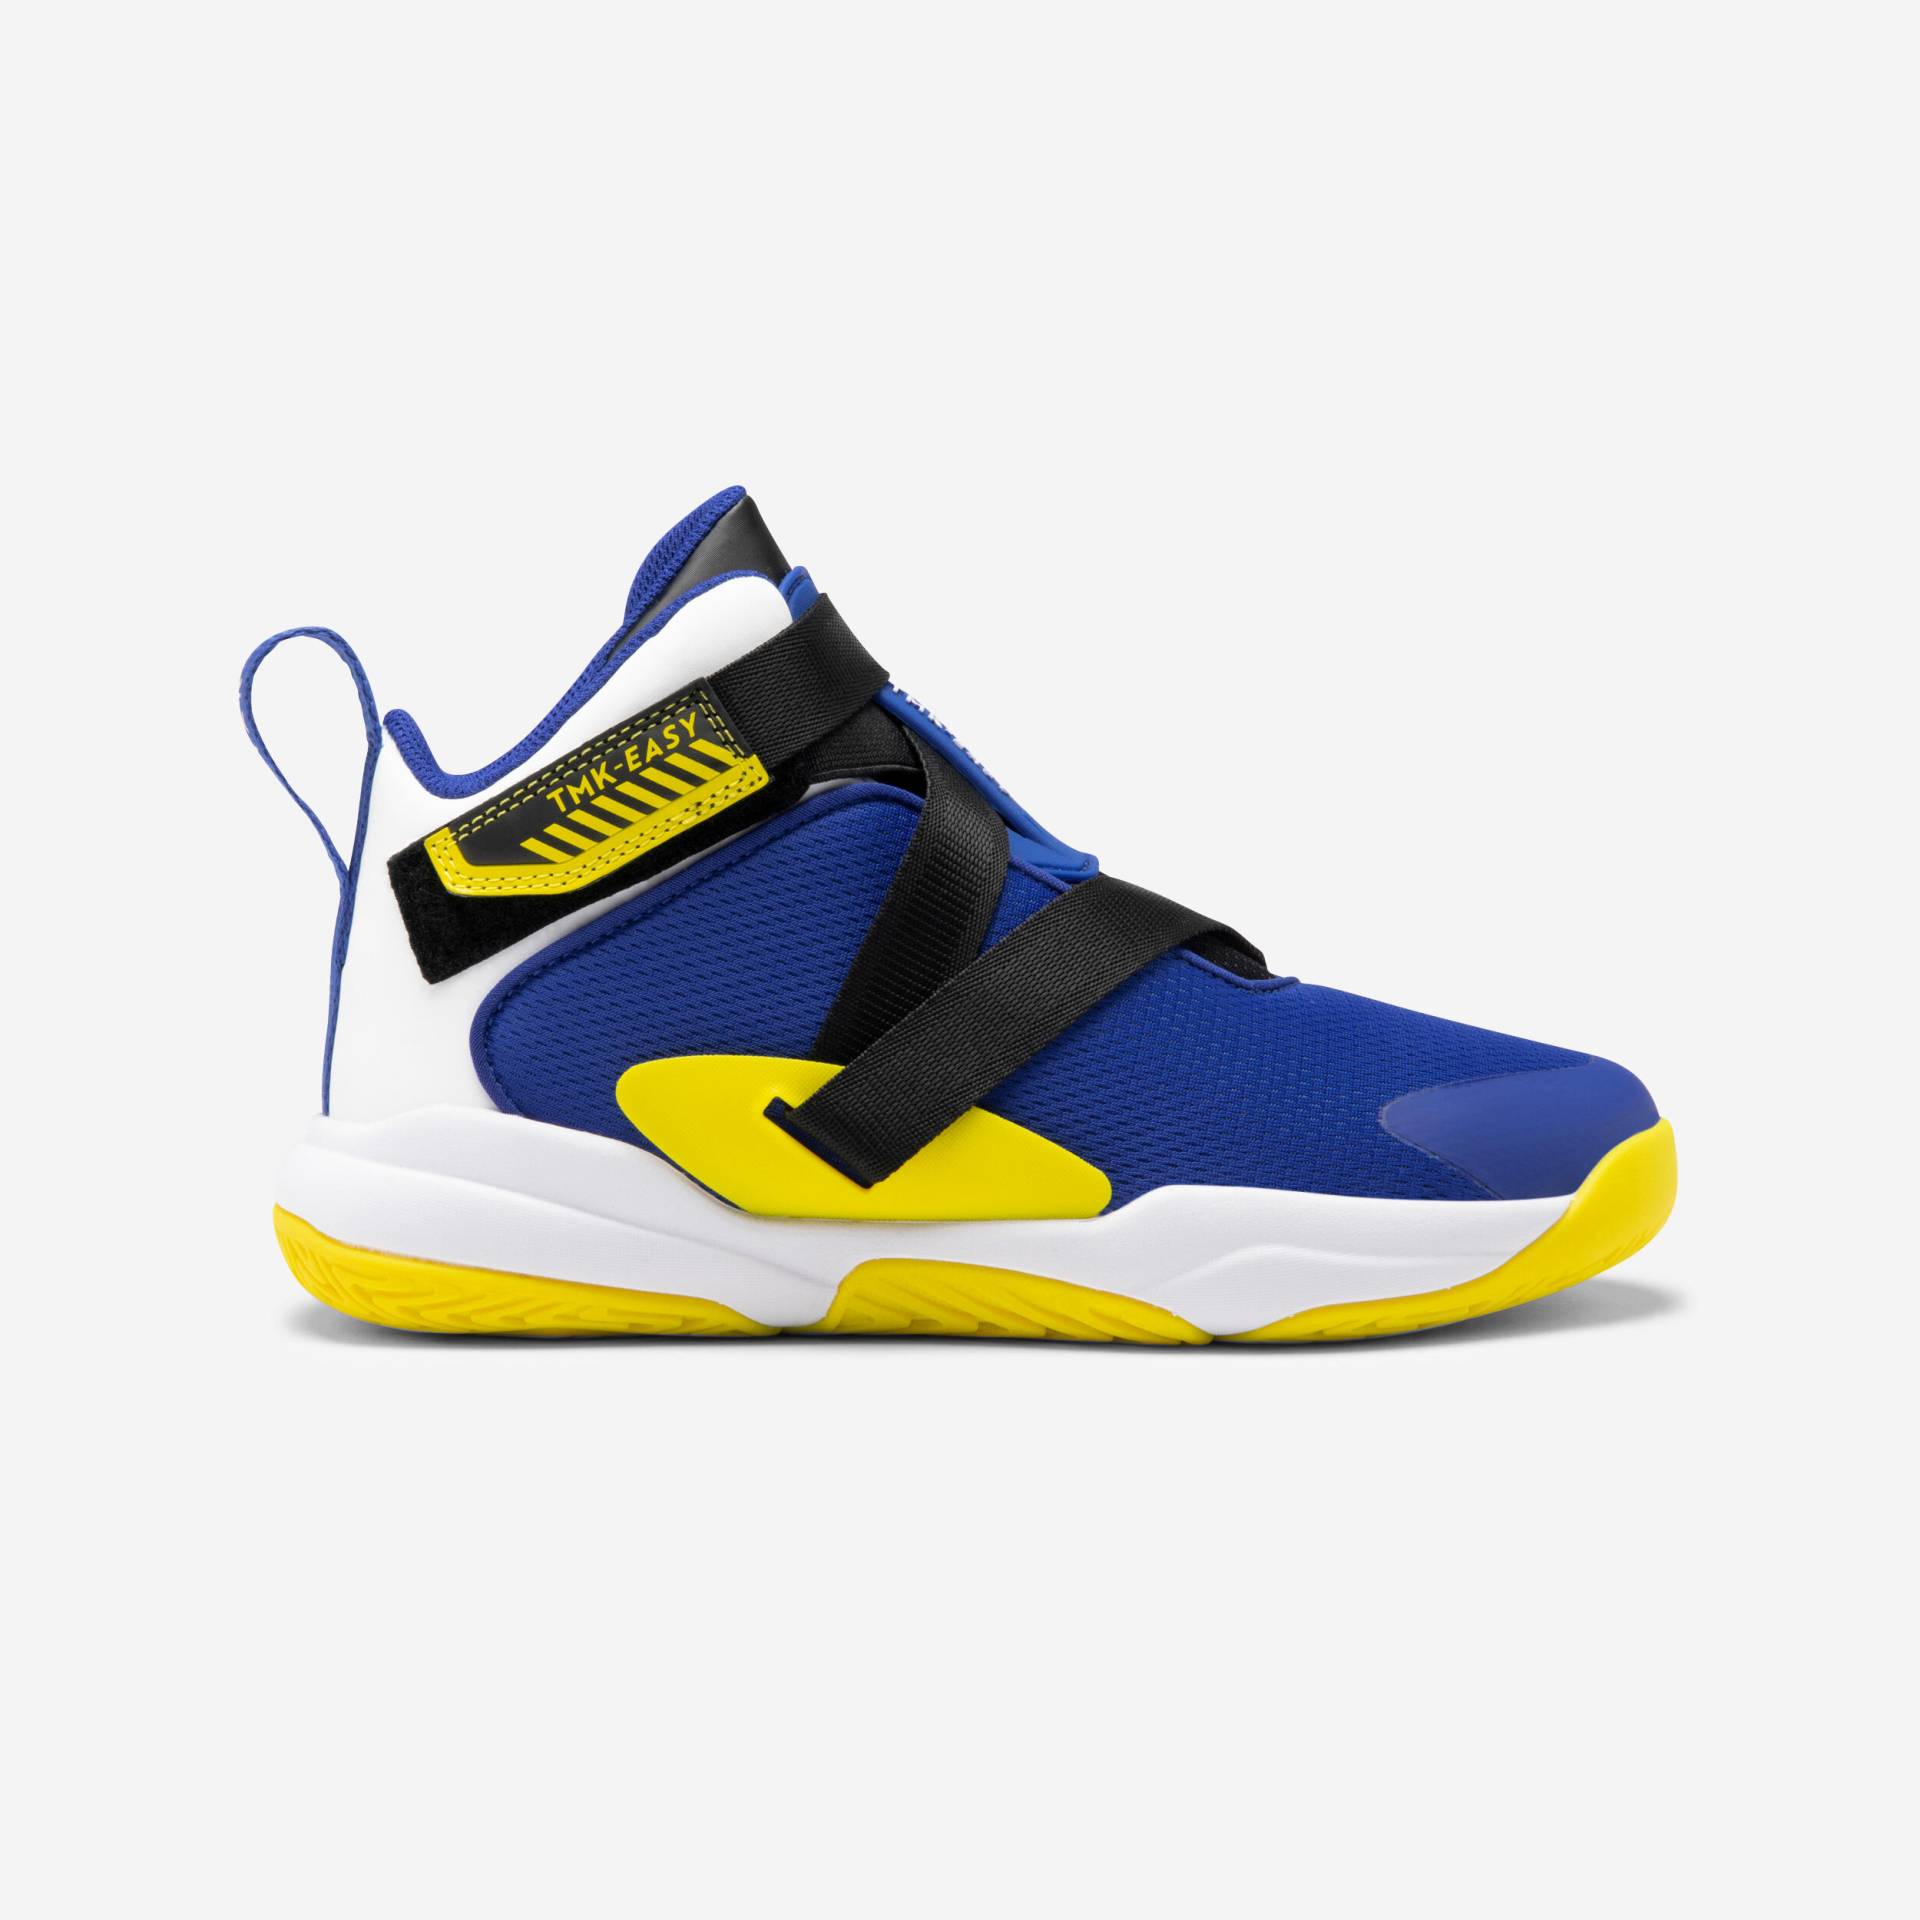 Kinder Basketball Schuhe - Easy X blau/gelb von TARMAK